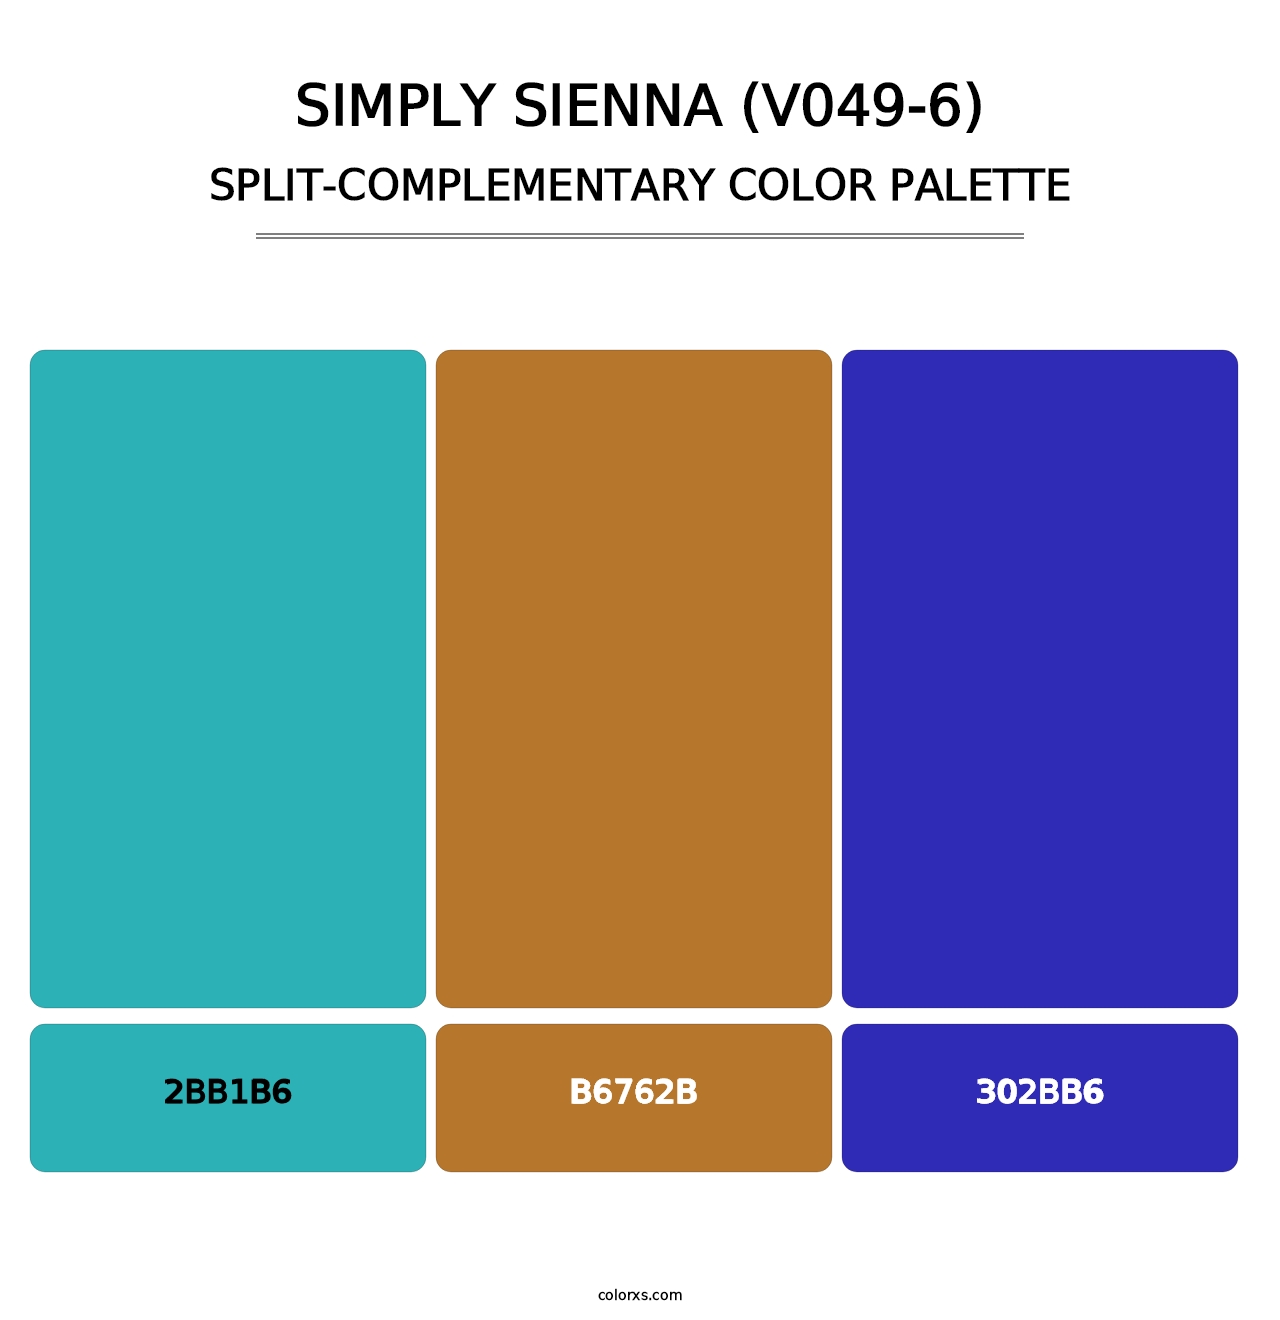 Simply Sienna (V049-6) - Split-Complementary Color Palette